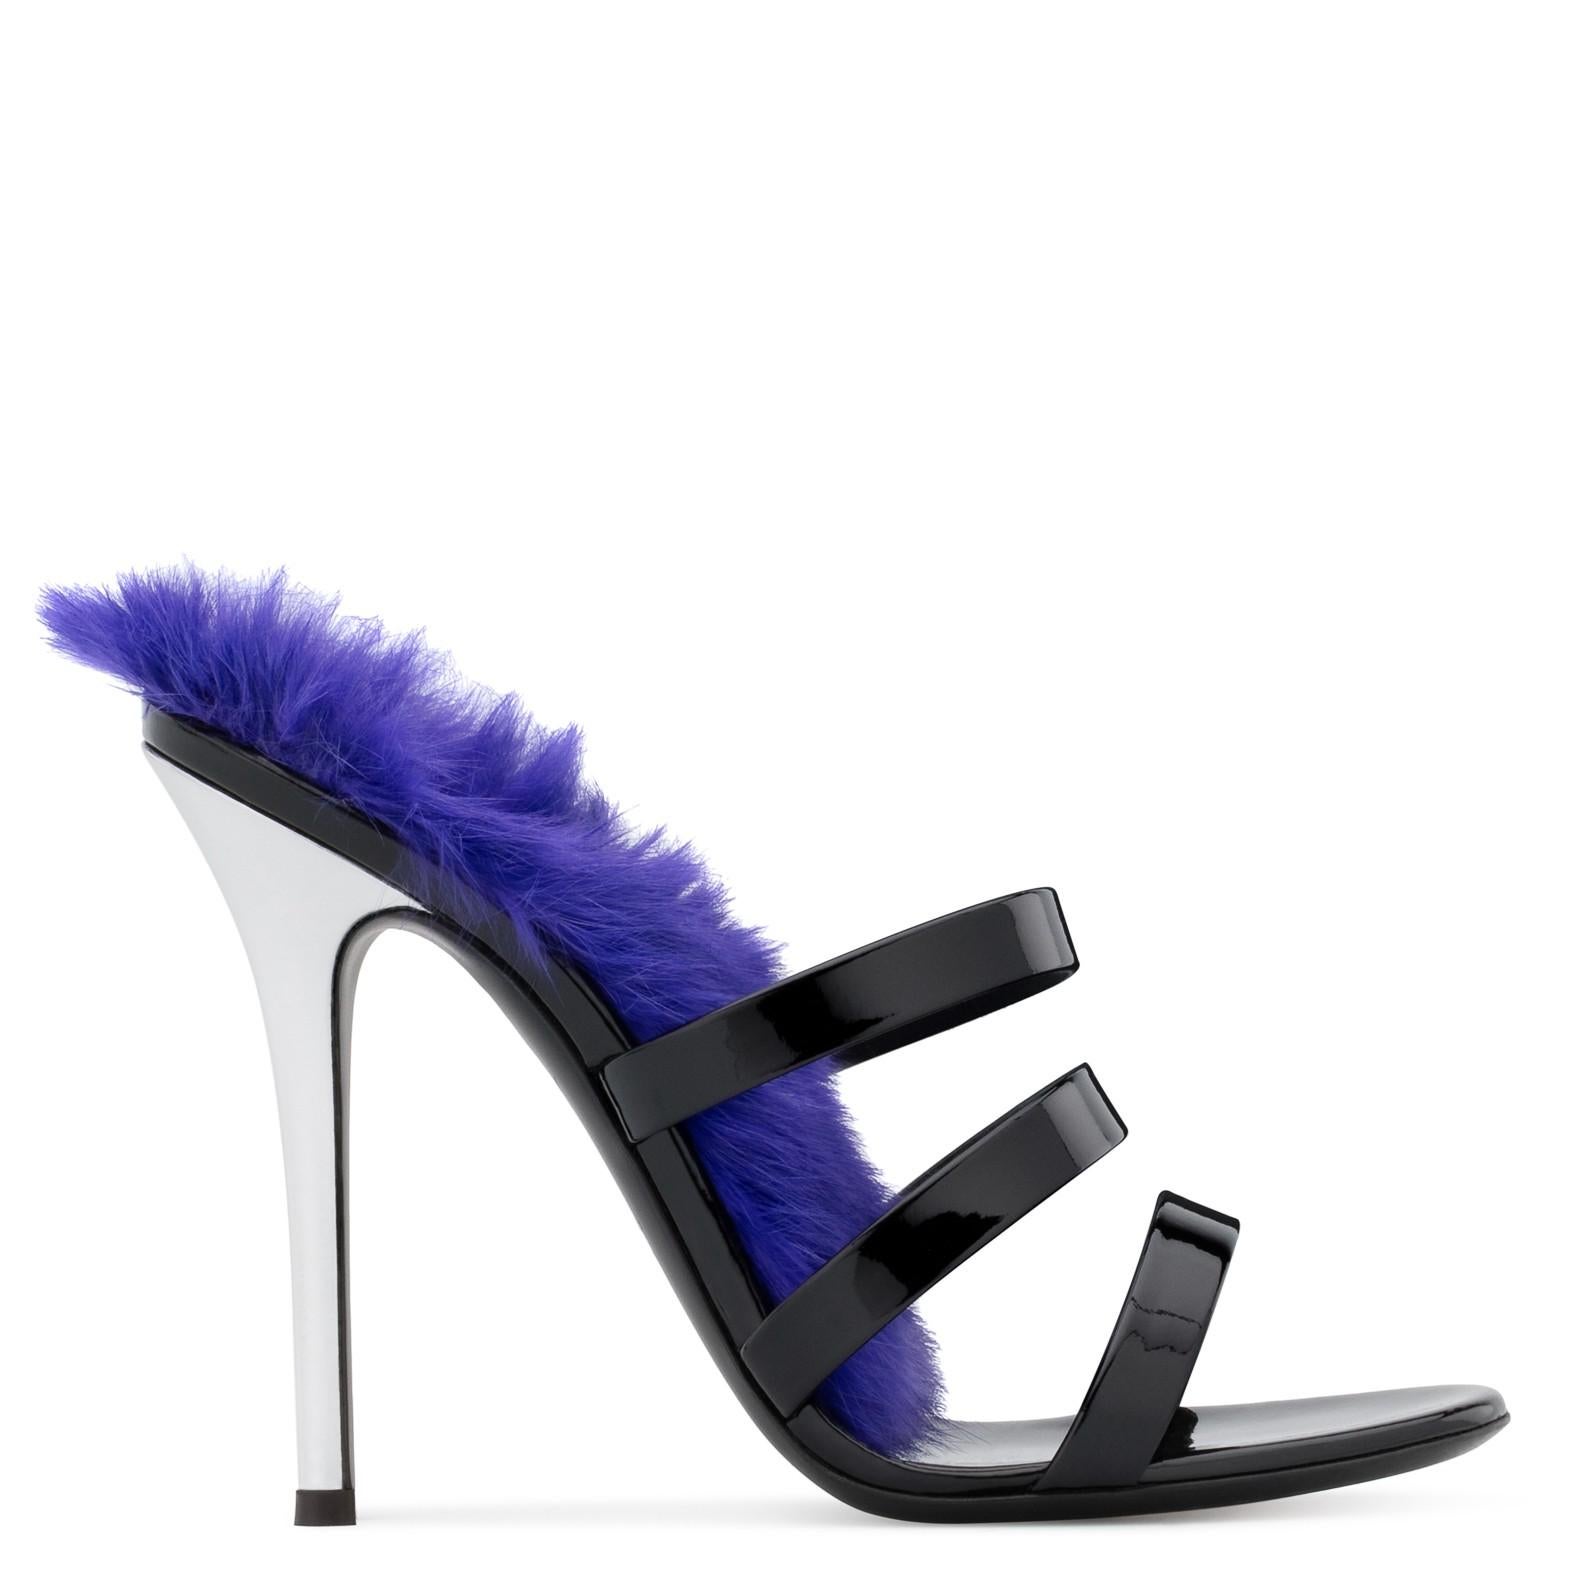 Purple Giuseppe Zanotti NEW Black Patent Feather Evening Slides Sandals Heels in Box